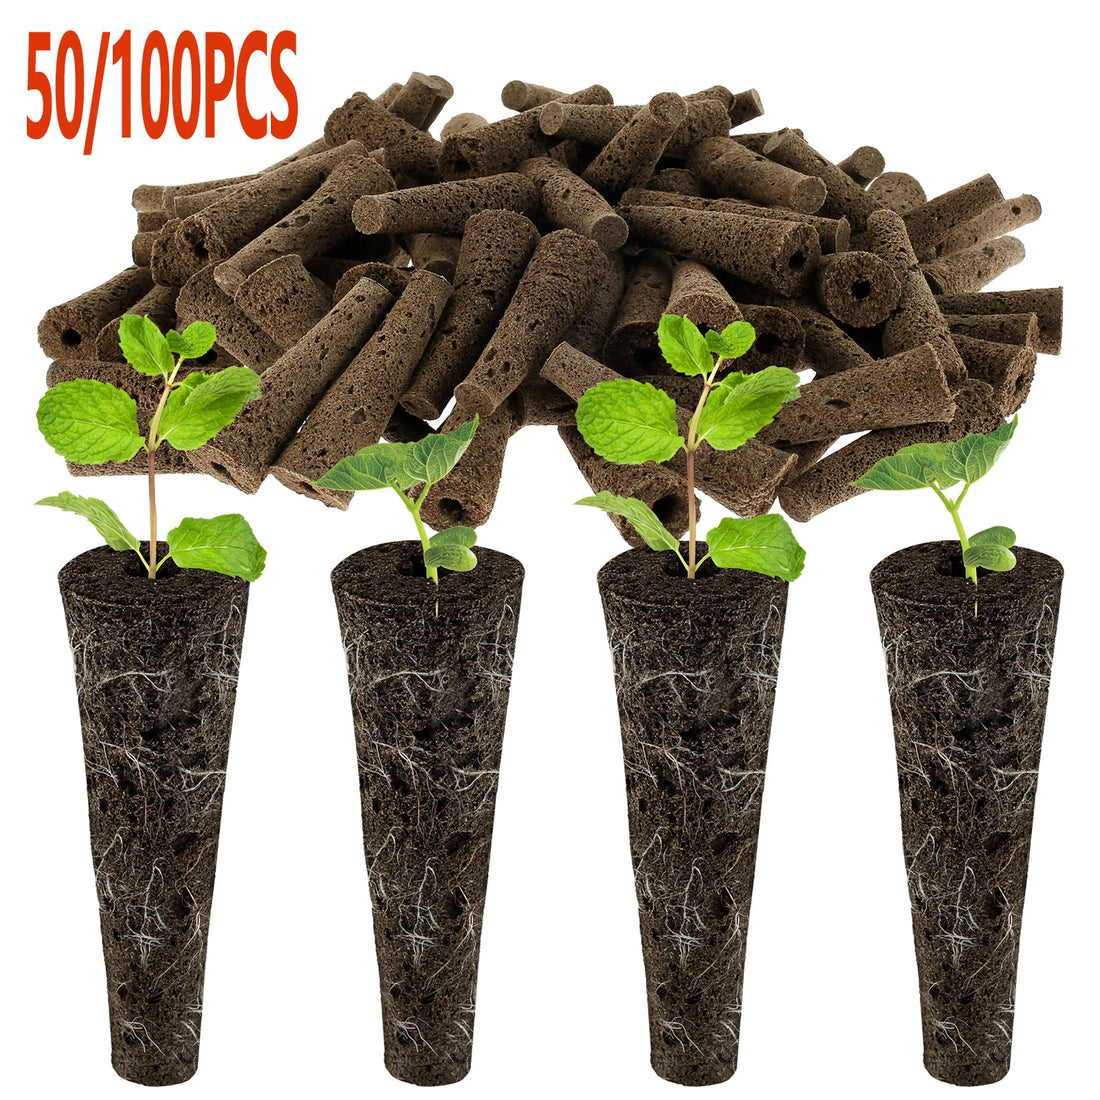  50/100Pcs Hydroponic Sponge Garden Vegetable Soilless Cultivation Growing Media Sponge Hydroponic Baskets Cloning Collar Garden #